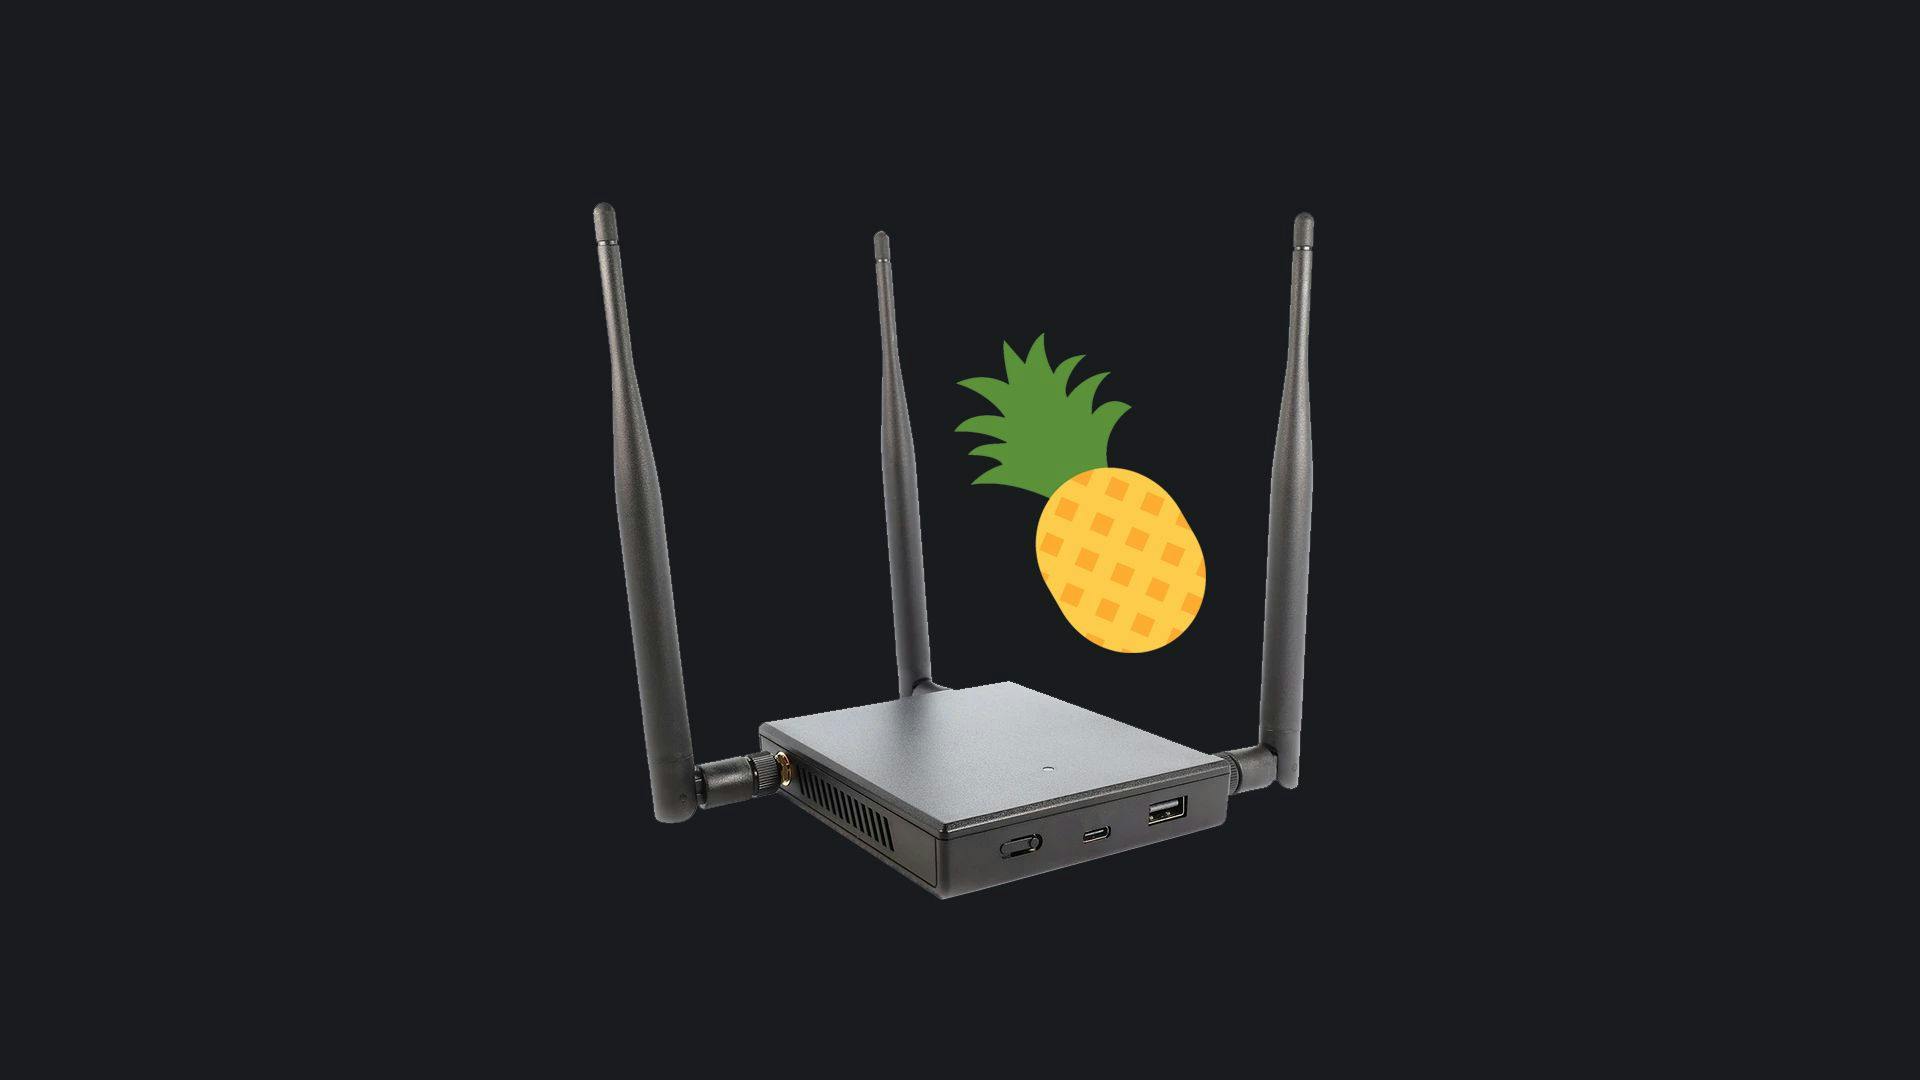 WiFi Pineapple - Hak5